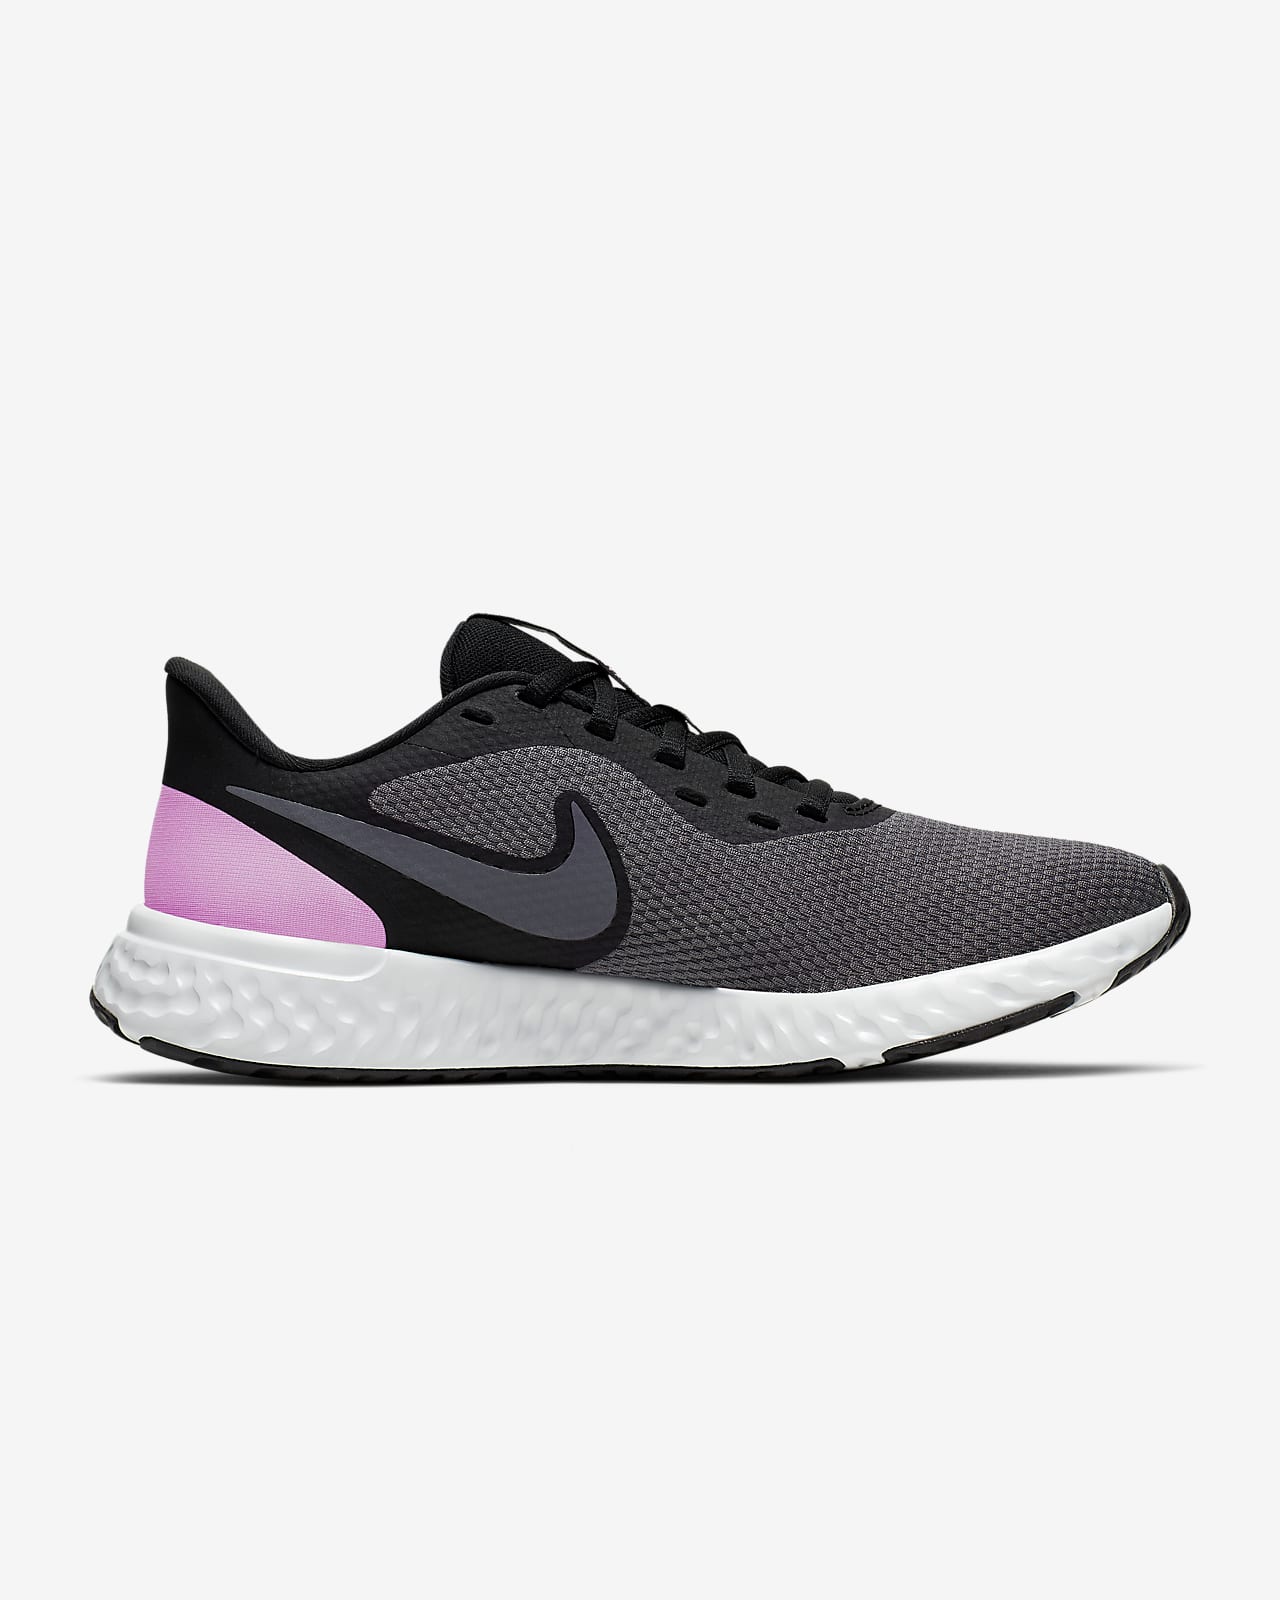 Nike Revolution 5 Black/Pink Women's Running Shoes, Size: 6